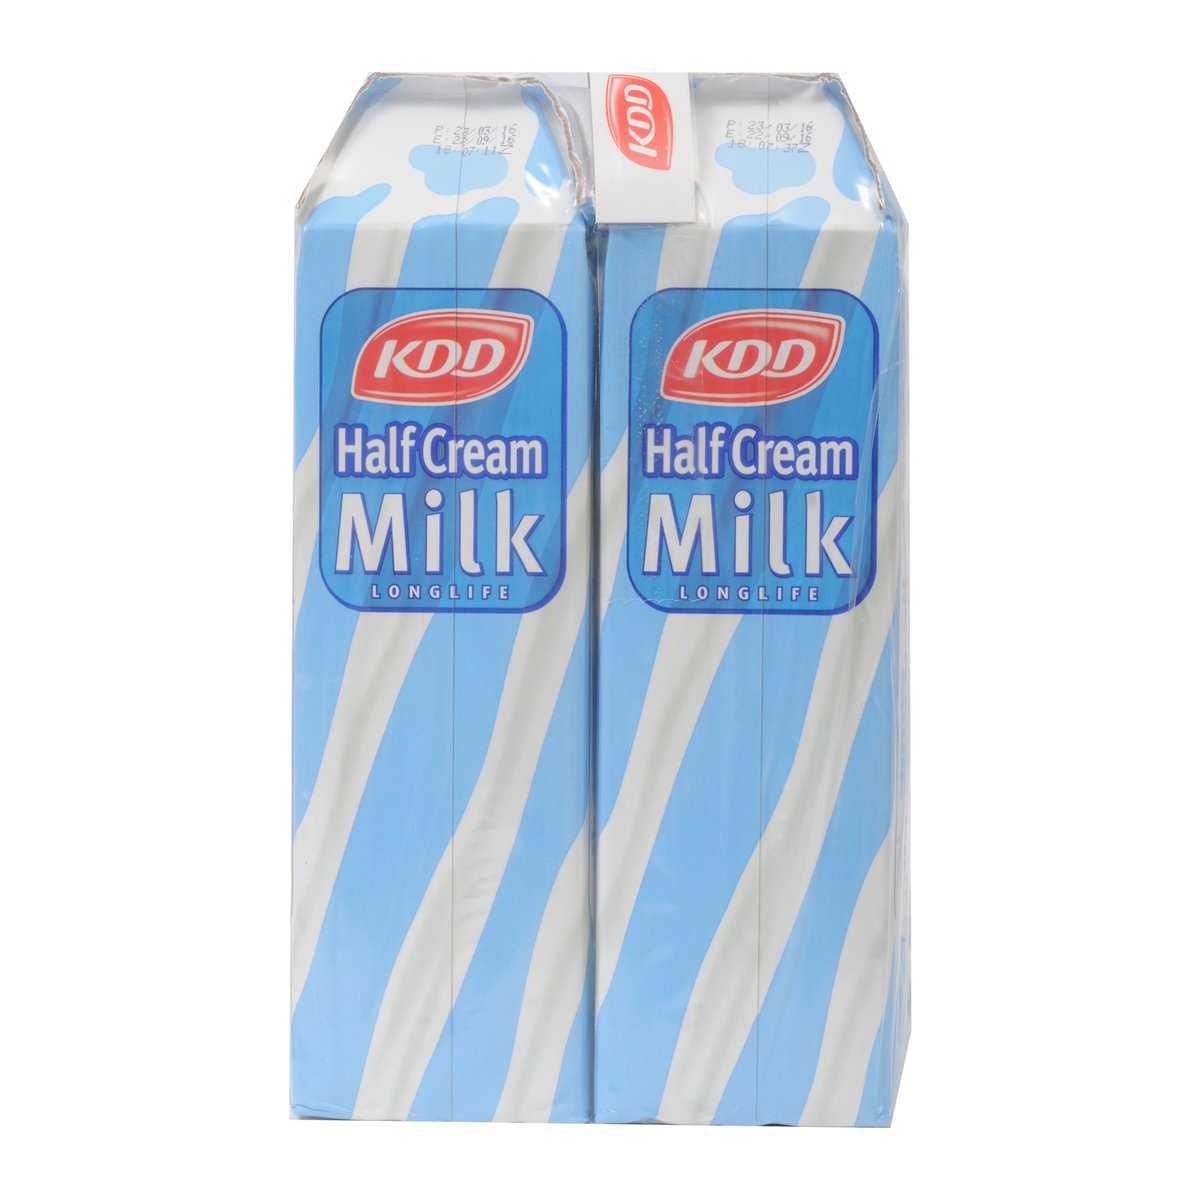 KDD Half Cream Milk Long Life 1Litre x 4 Pieces